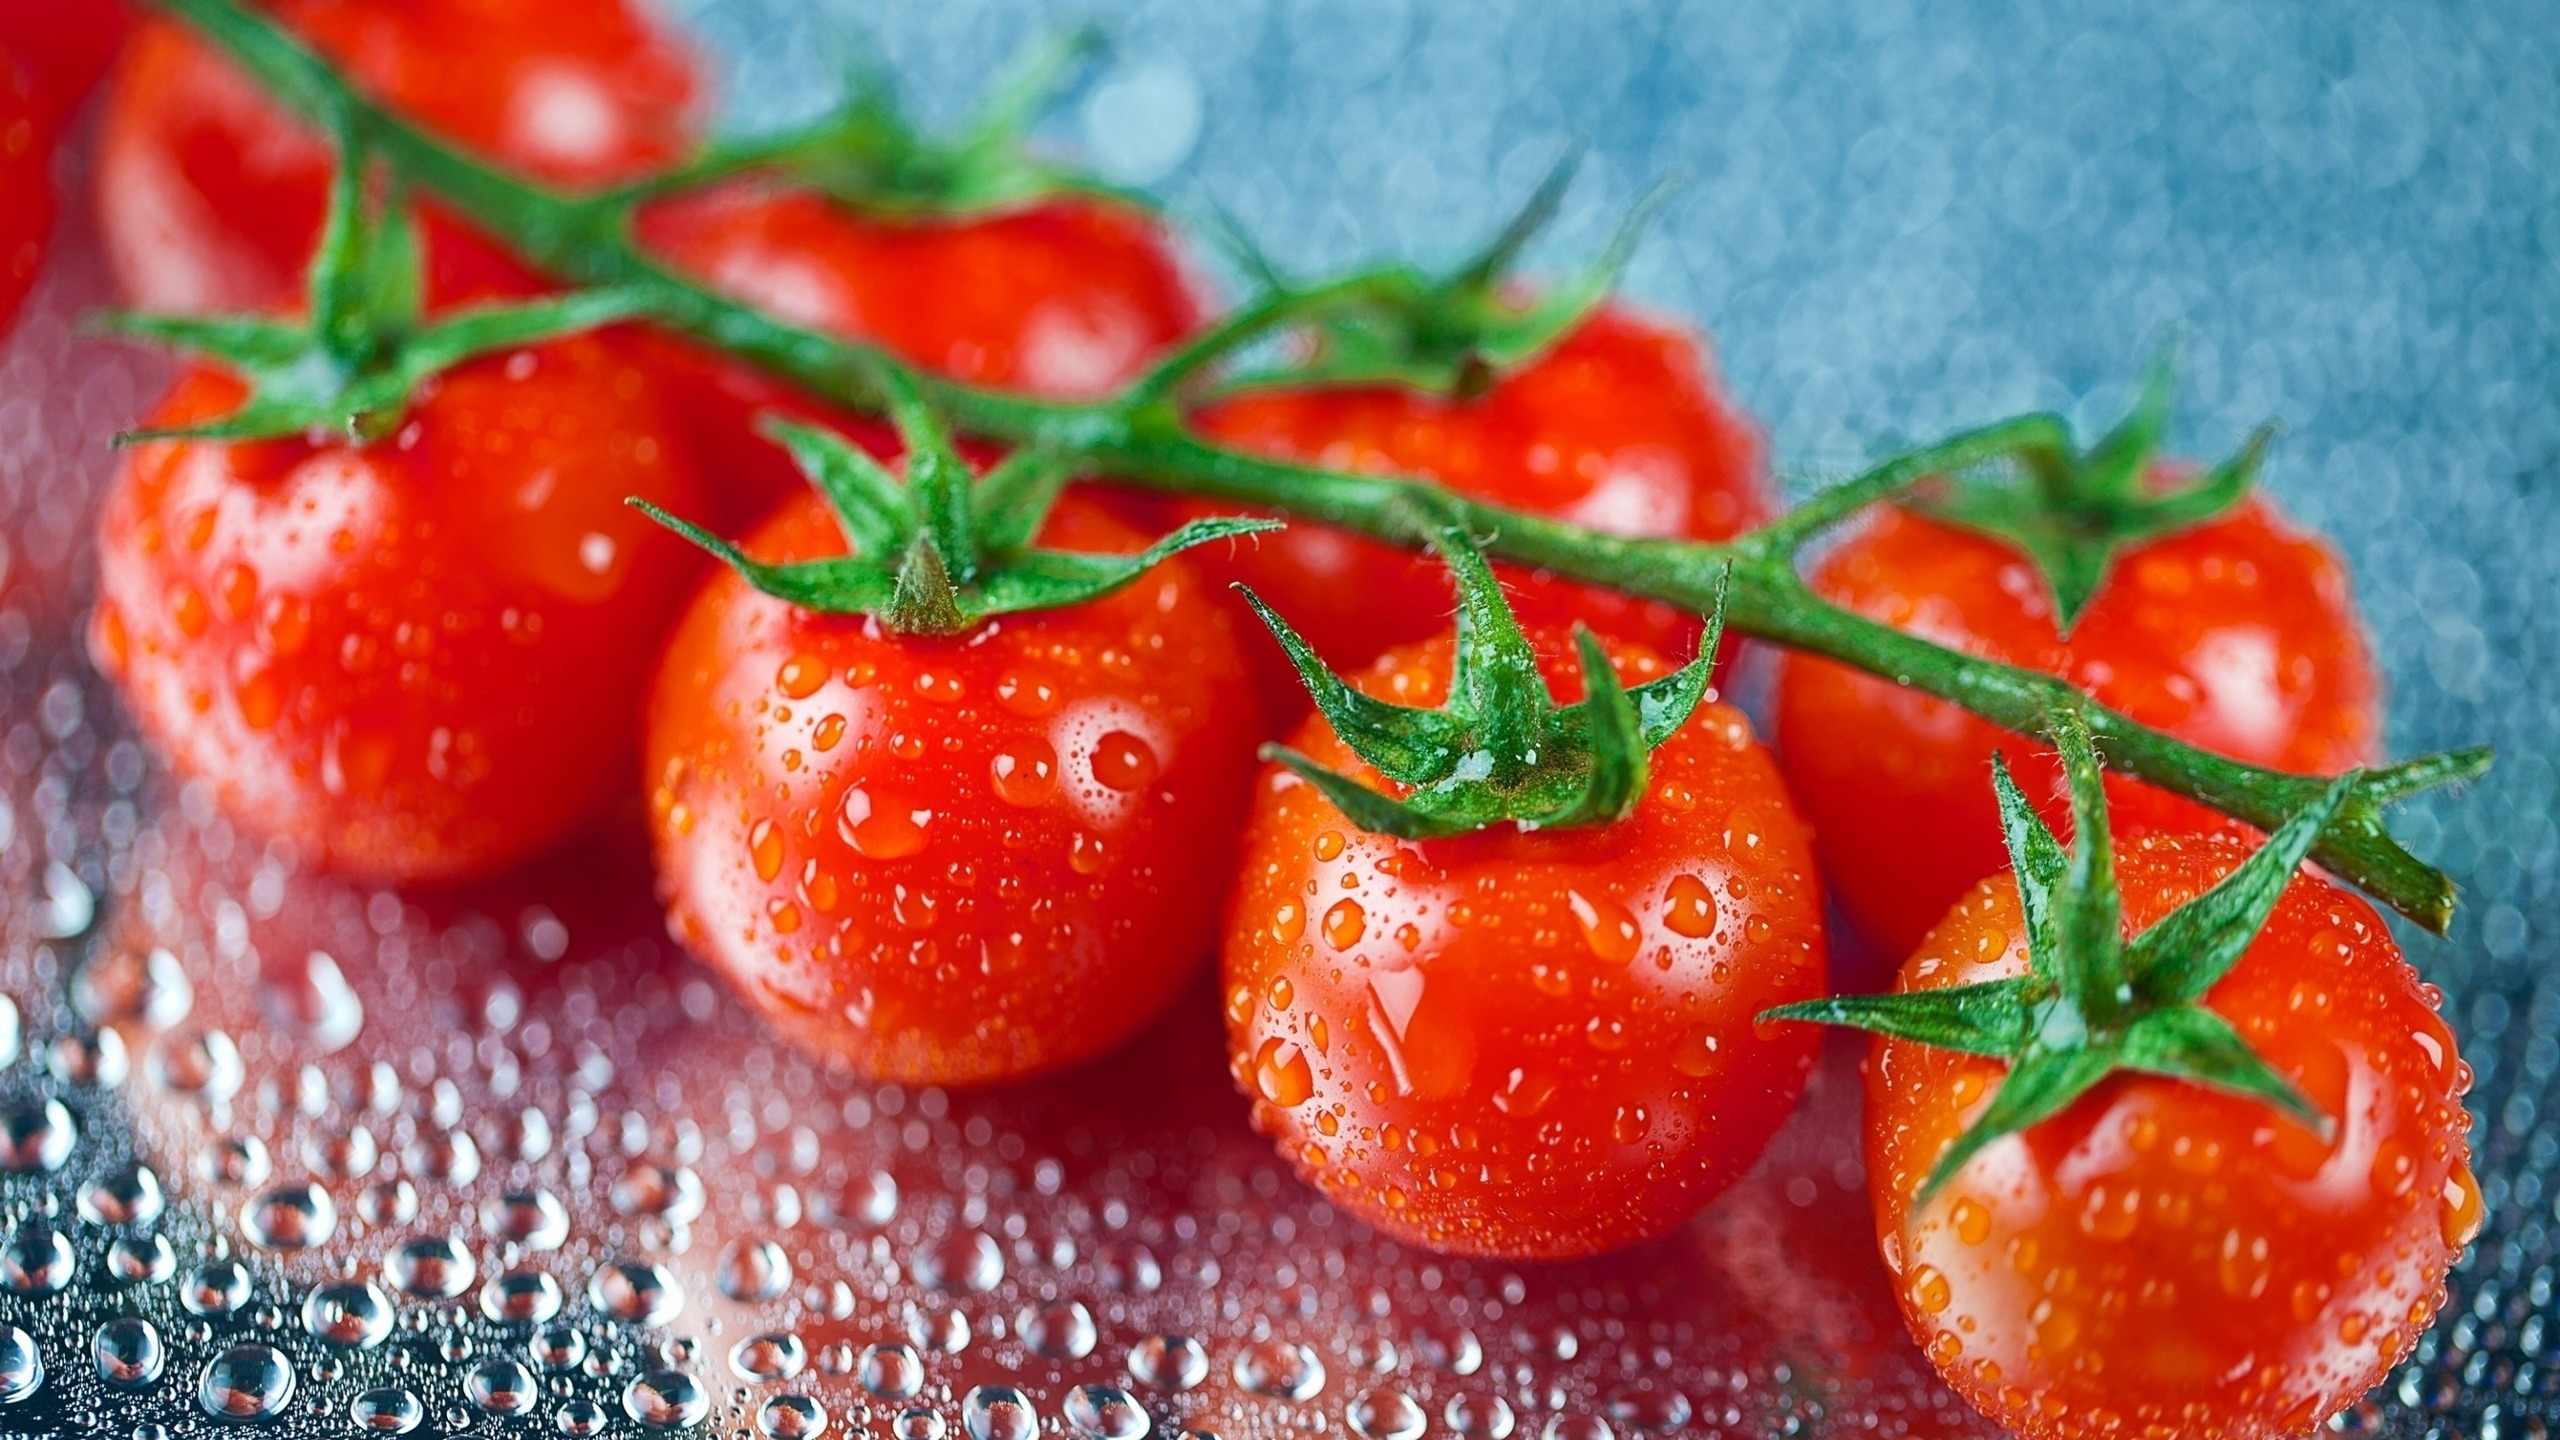 Fresh Cherry Tomatoes for 2560x1440 HDTV resolution